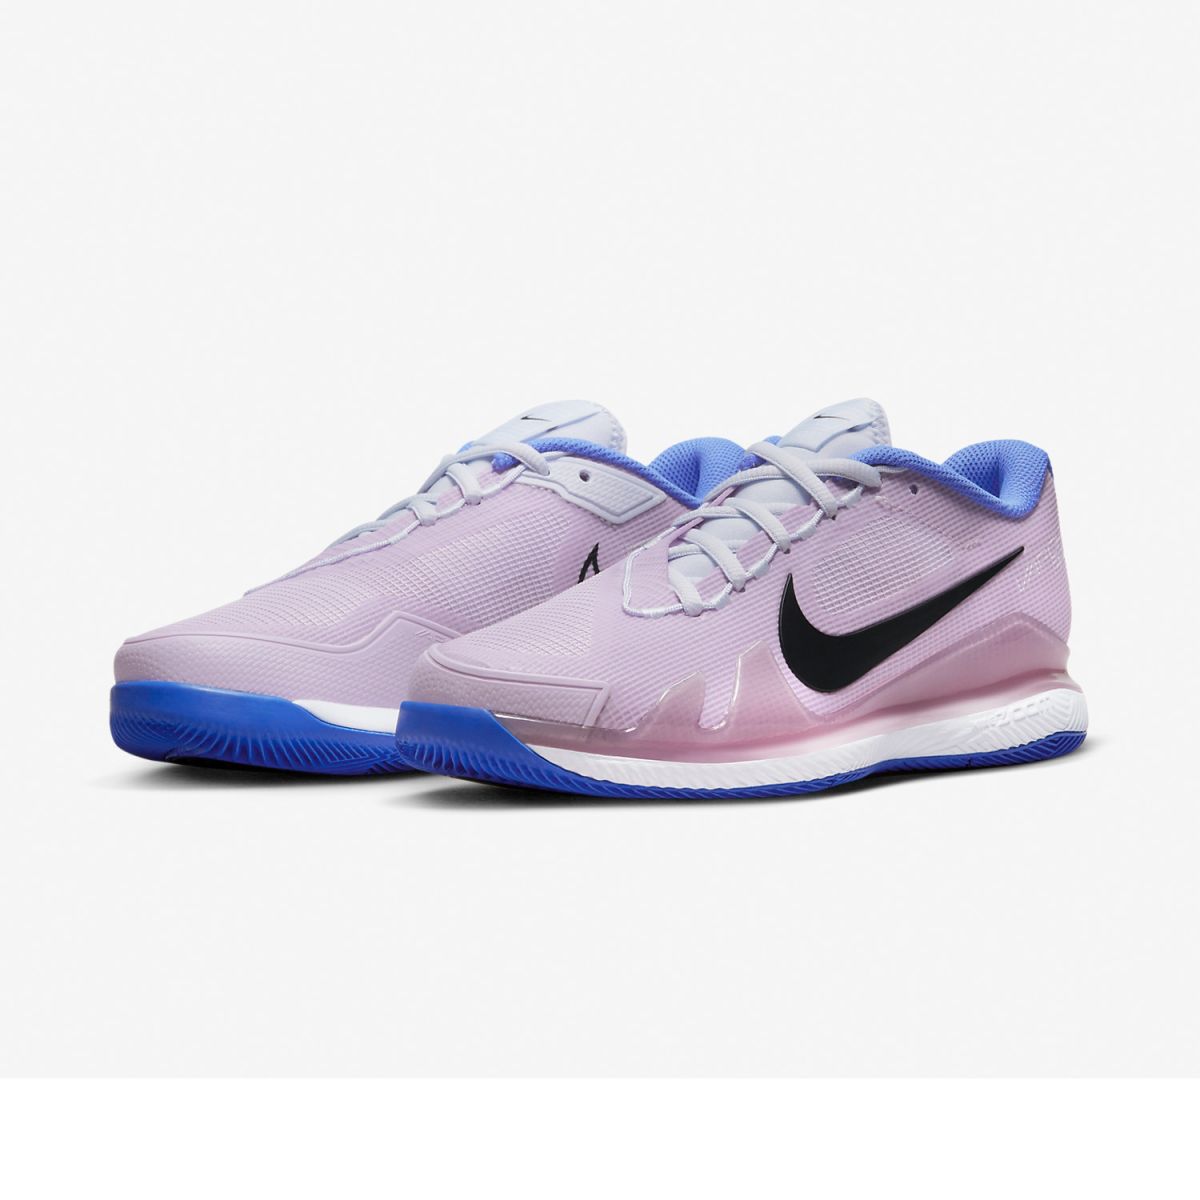 NikeCourt Air Zoom Vapor Pro Hard Court Women's Tennis Shoes